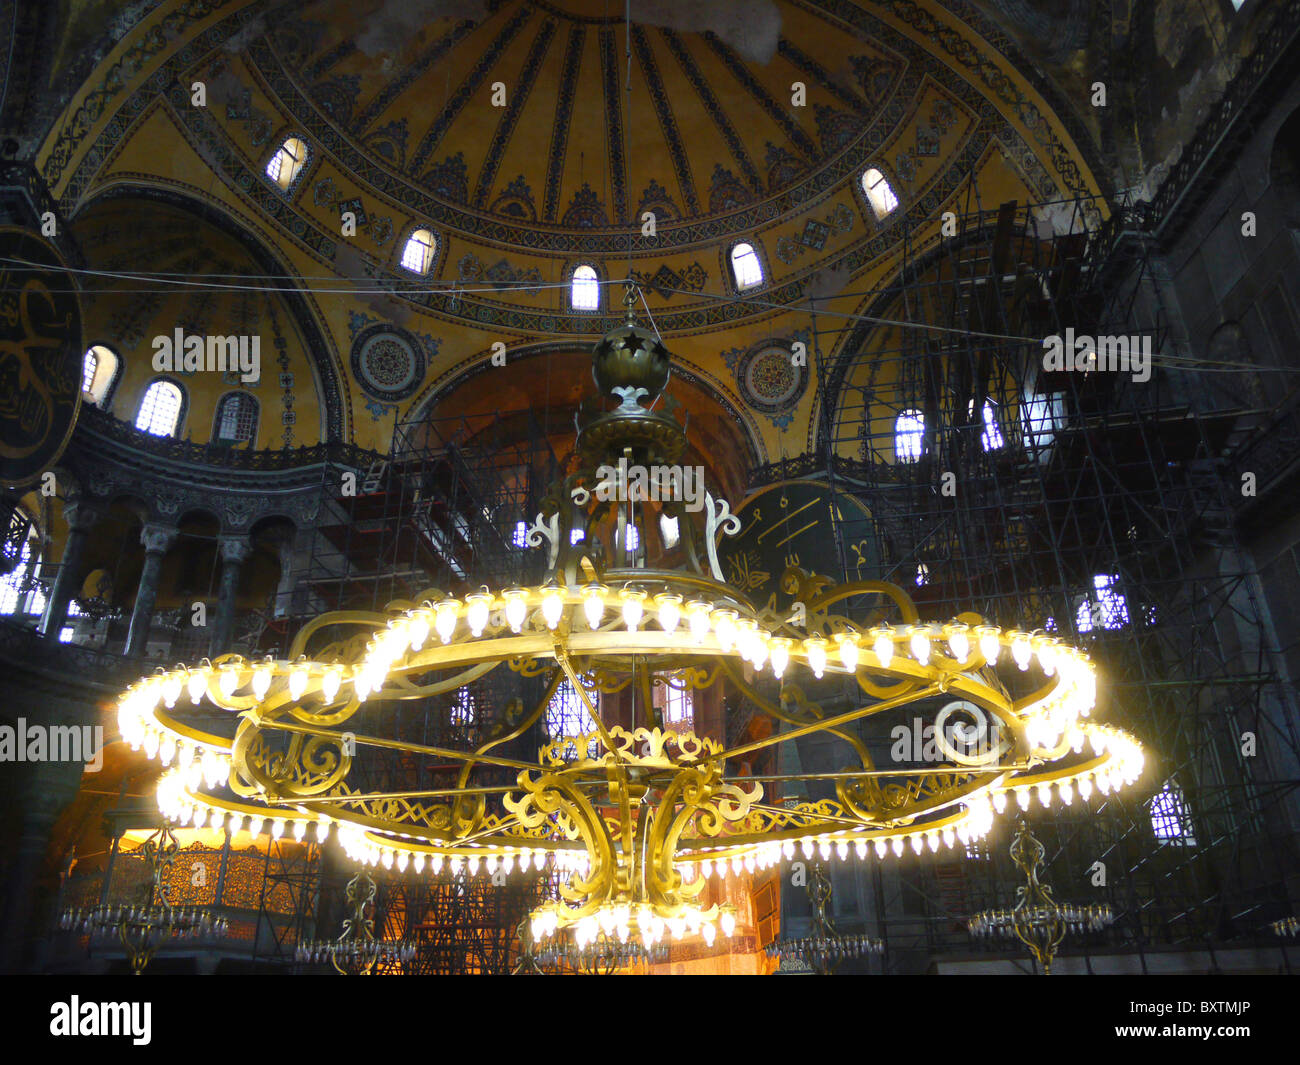 Istanbul Interior Of The Dome Over The Hagia Sophia Museum Stock Photo